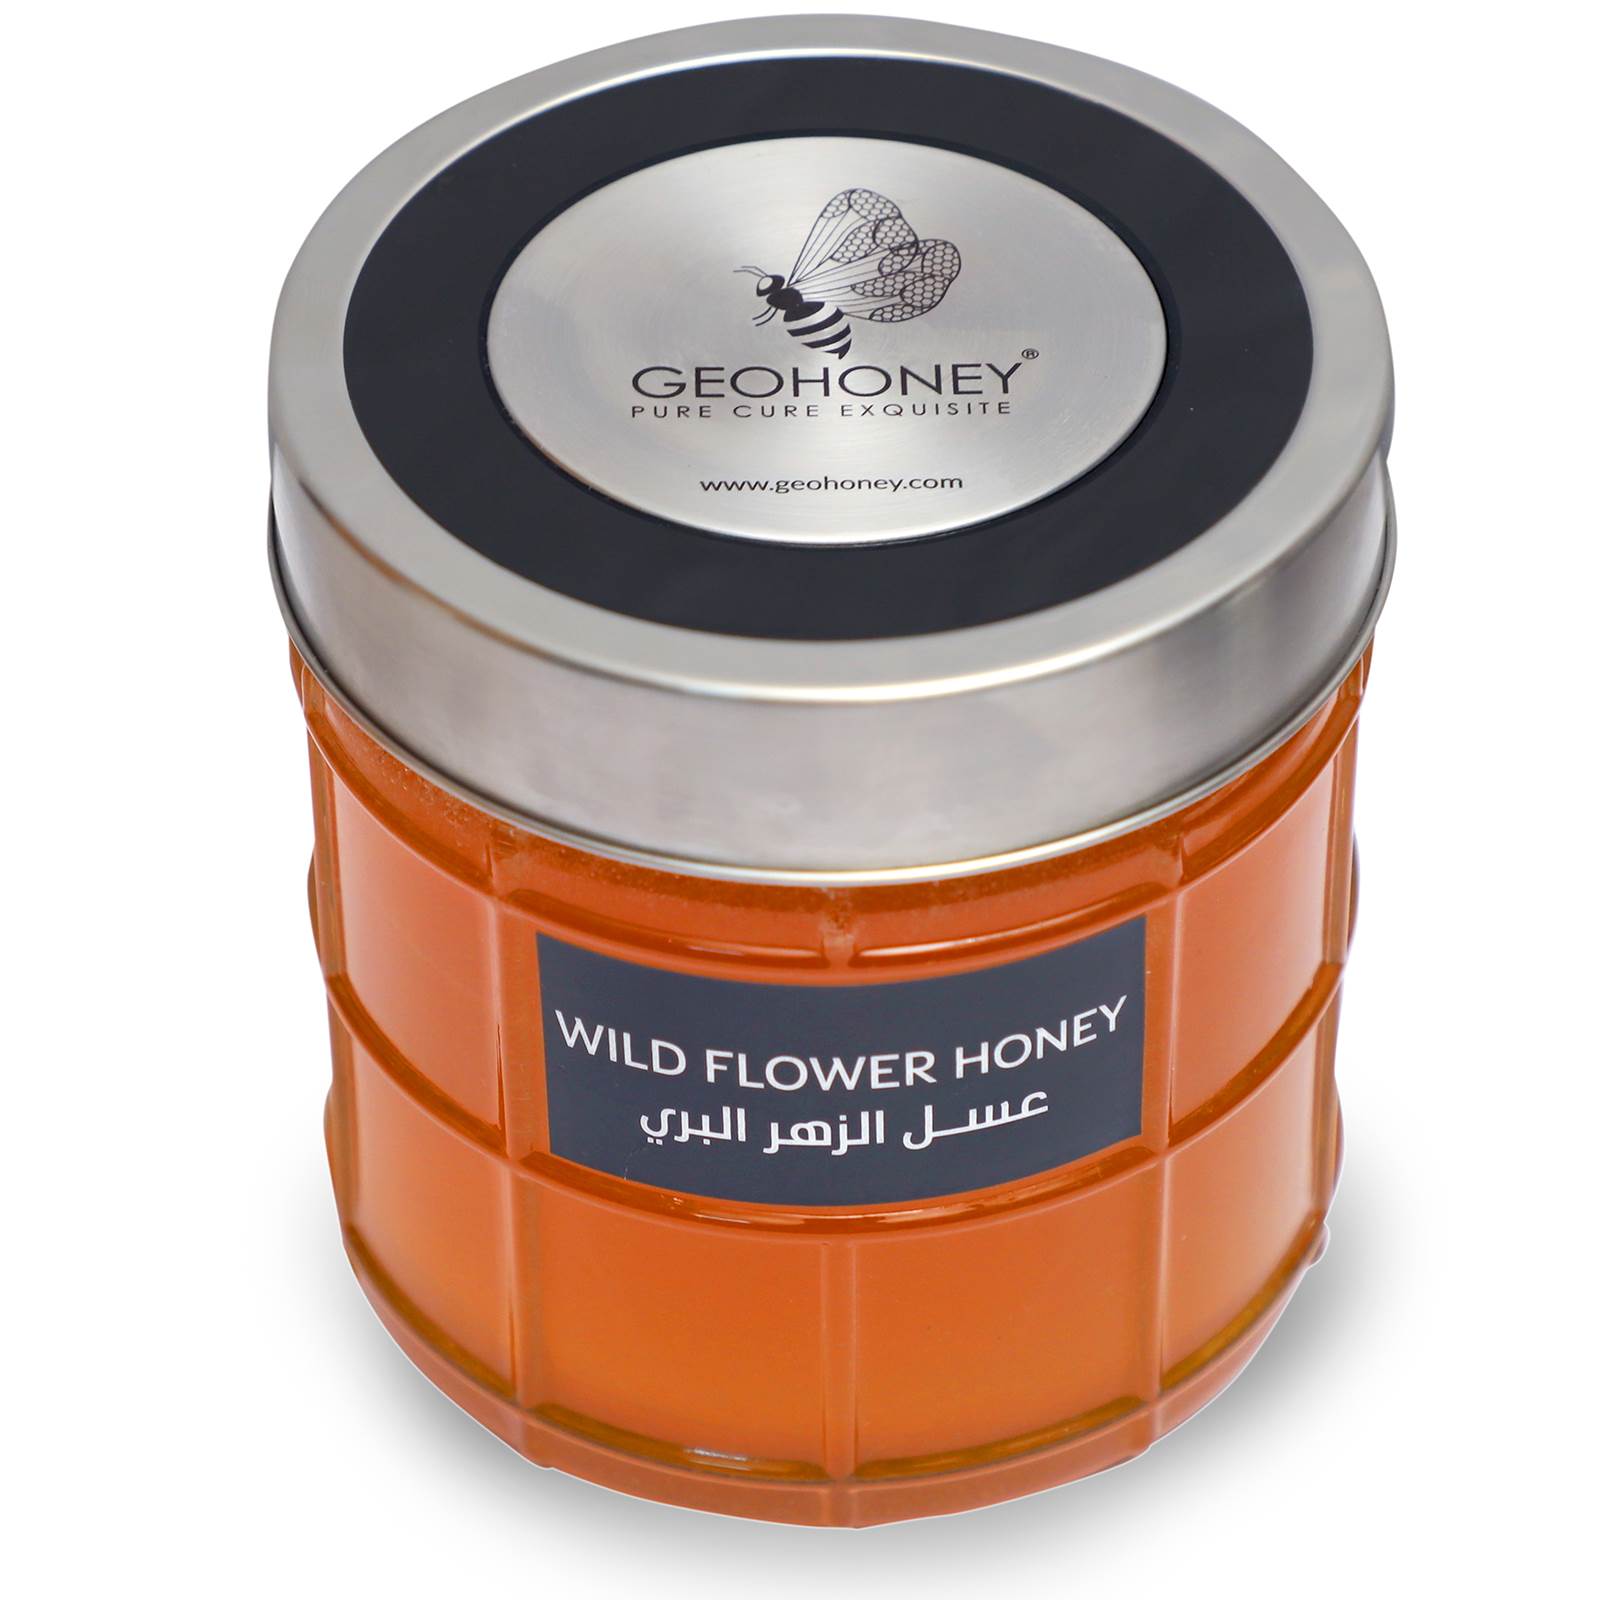 Wildflower honey.JPG  by geohoney